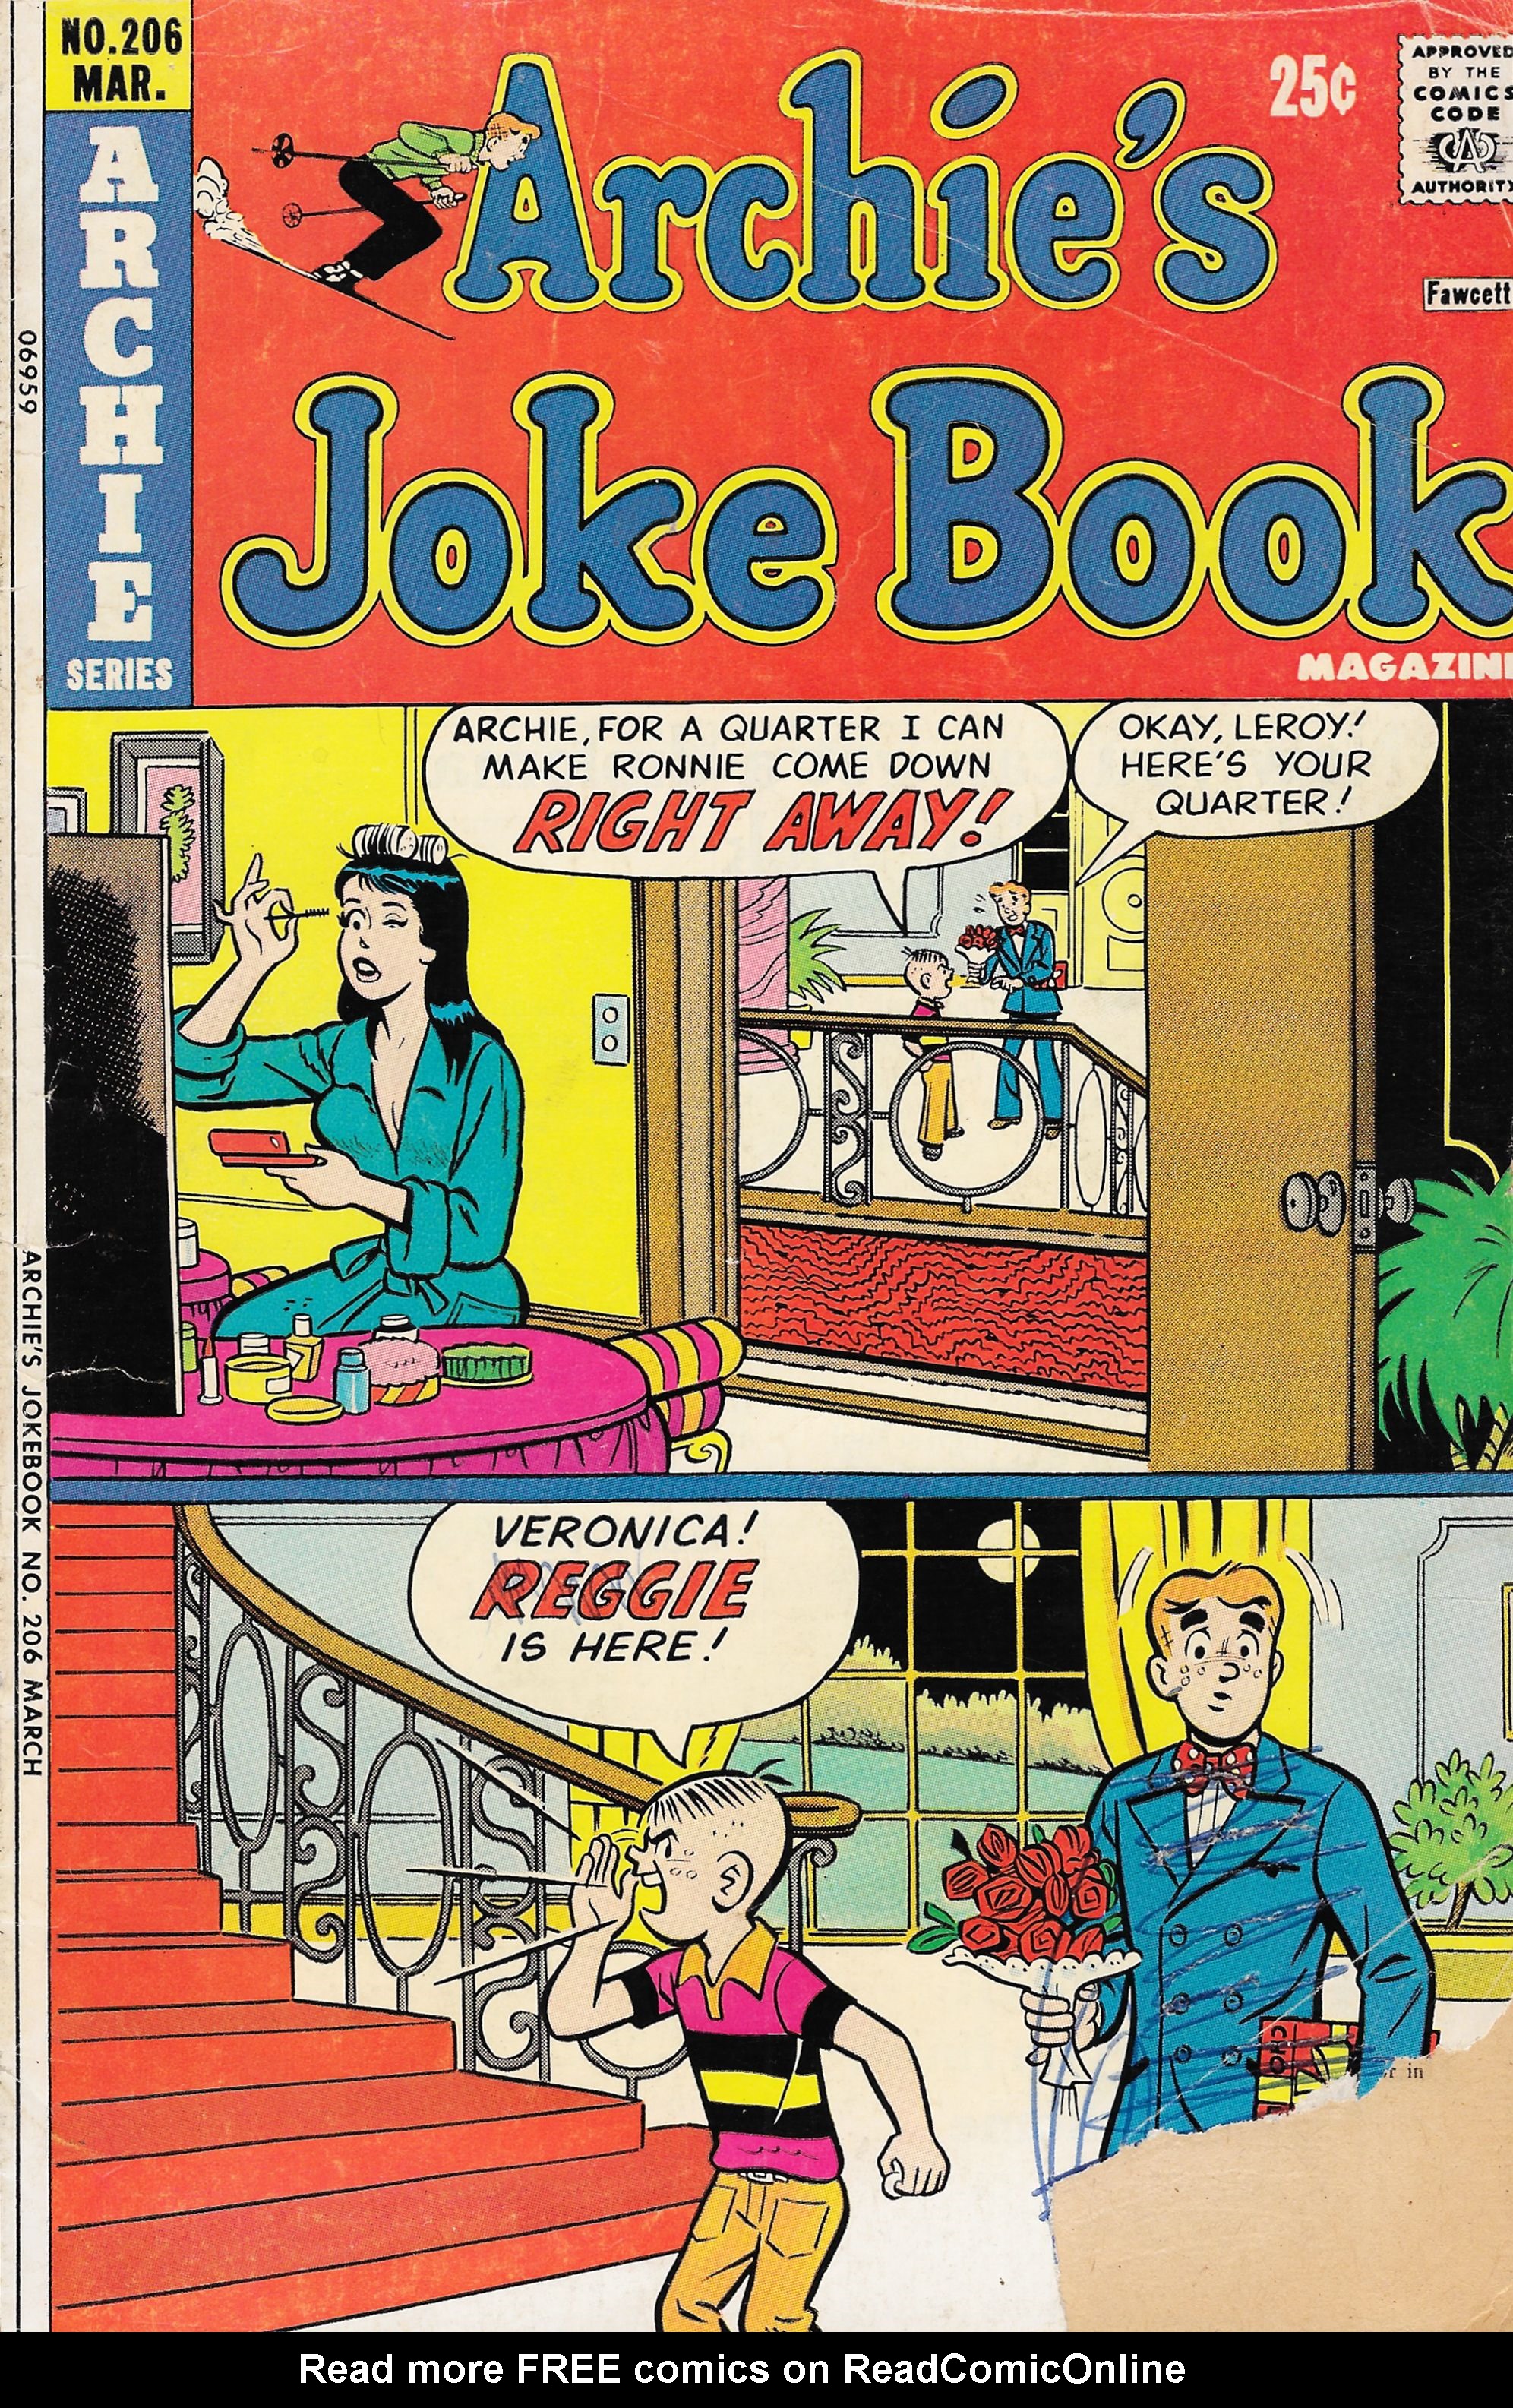 Read online Archie's Joke Book Magazine comic -  Issue #206 - 1